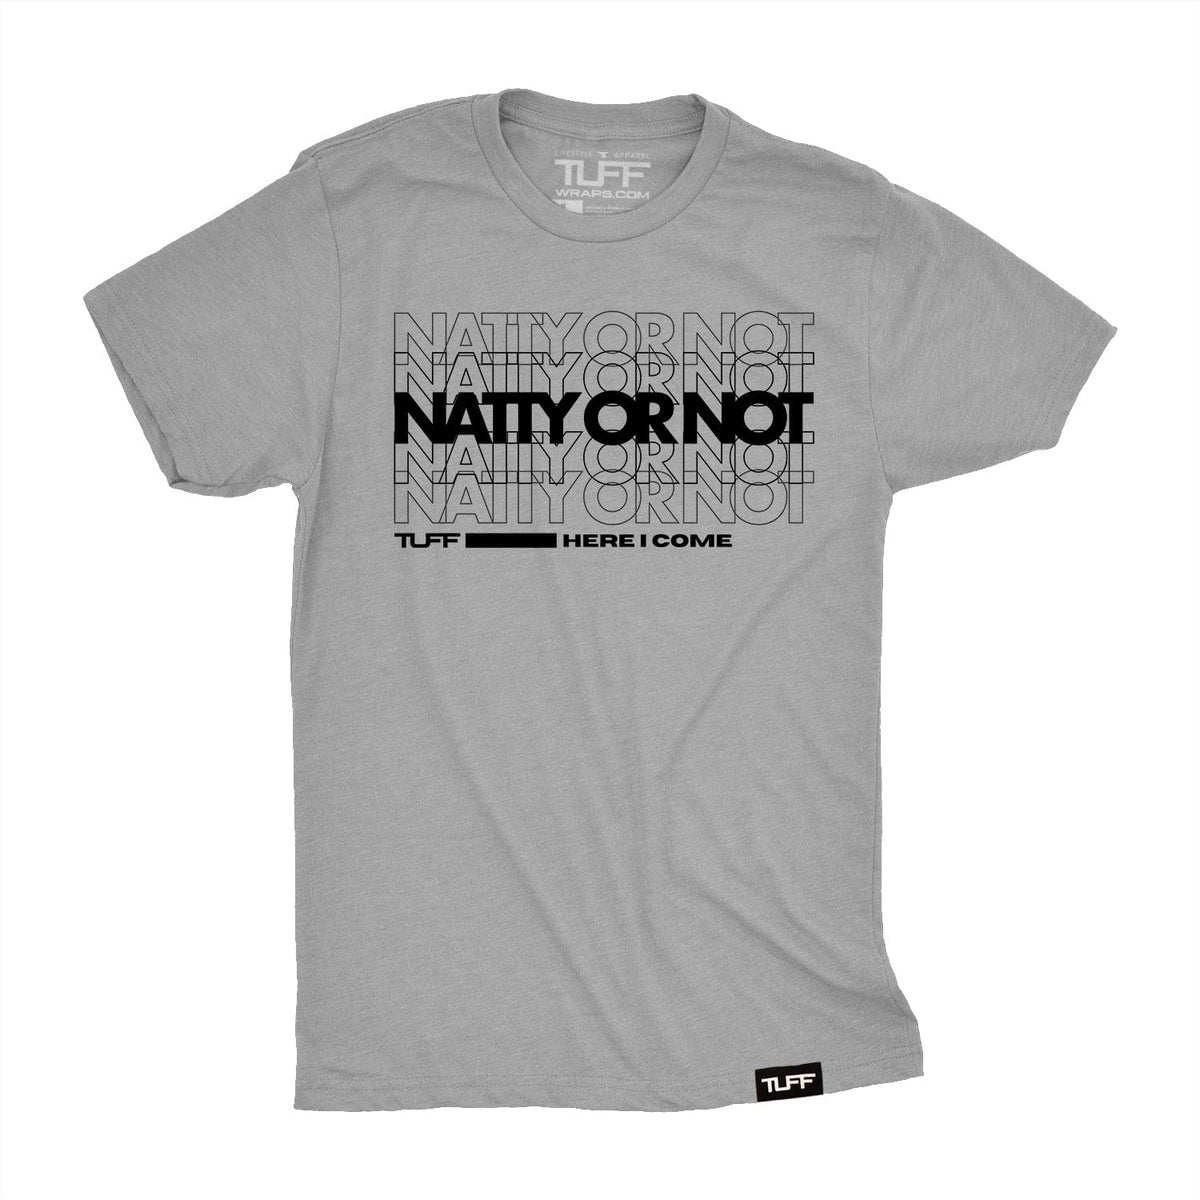 Natty Or Not Tee S / Heather Gray TuffWraps.com